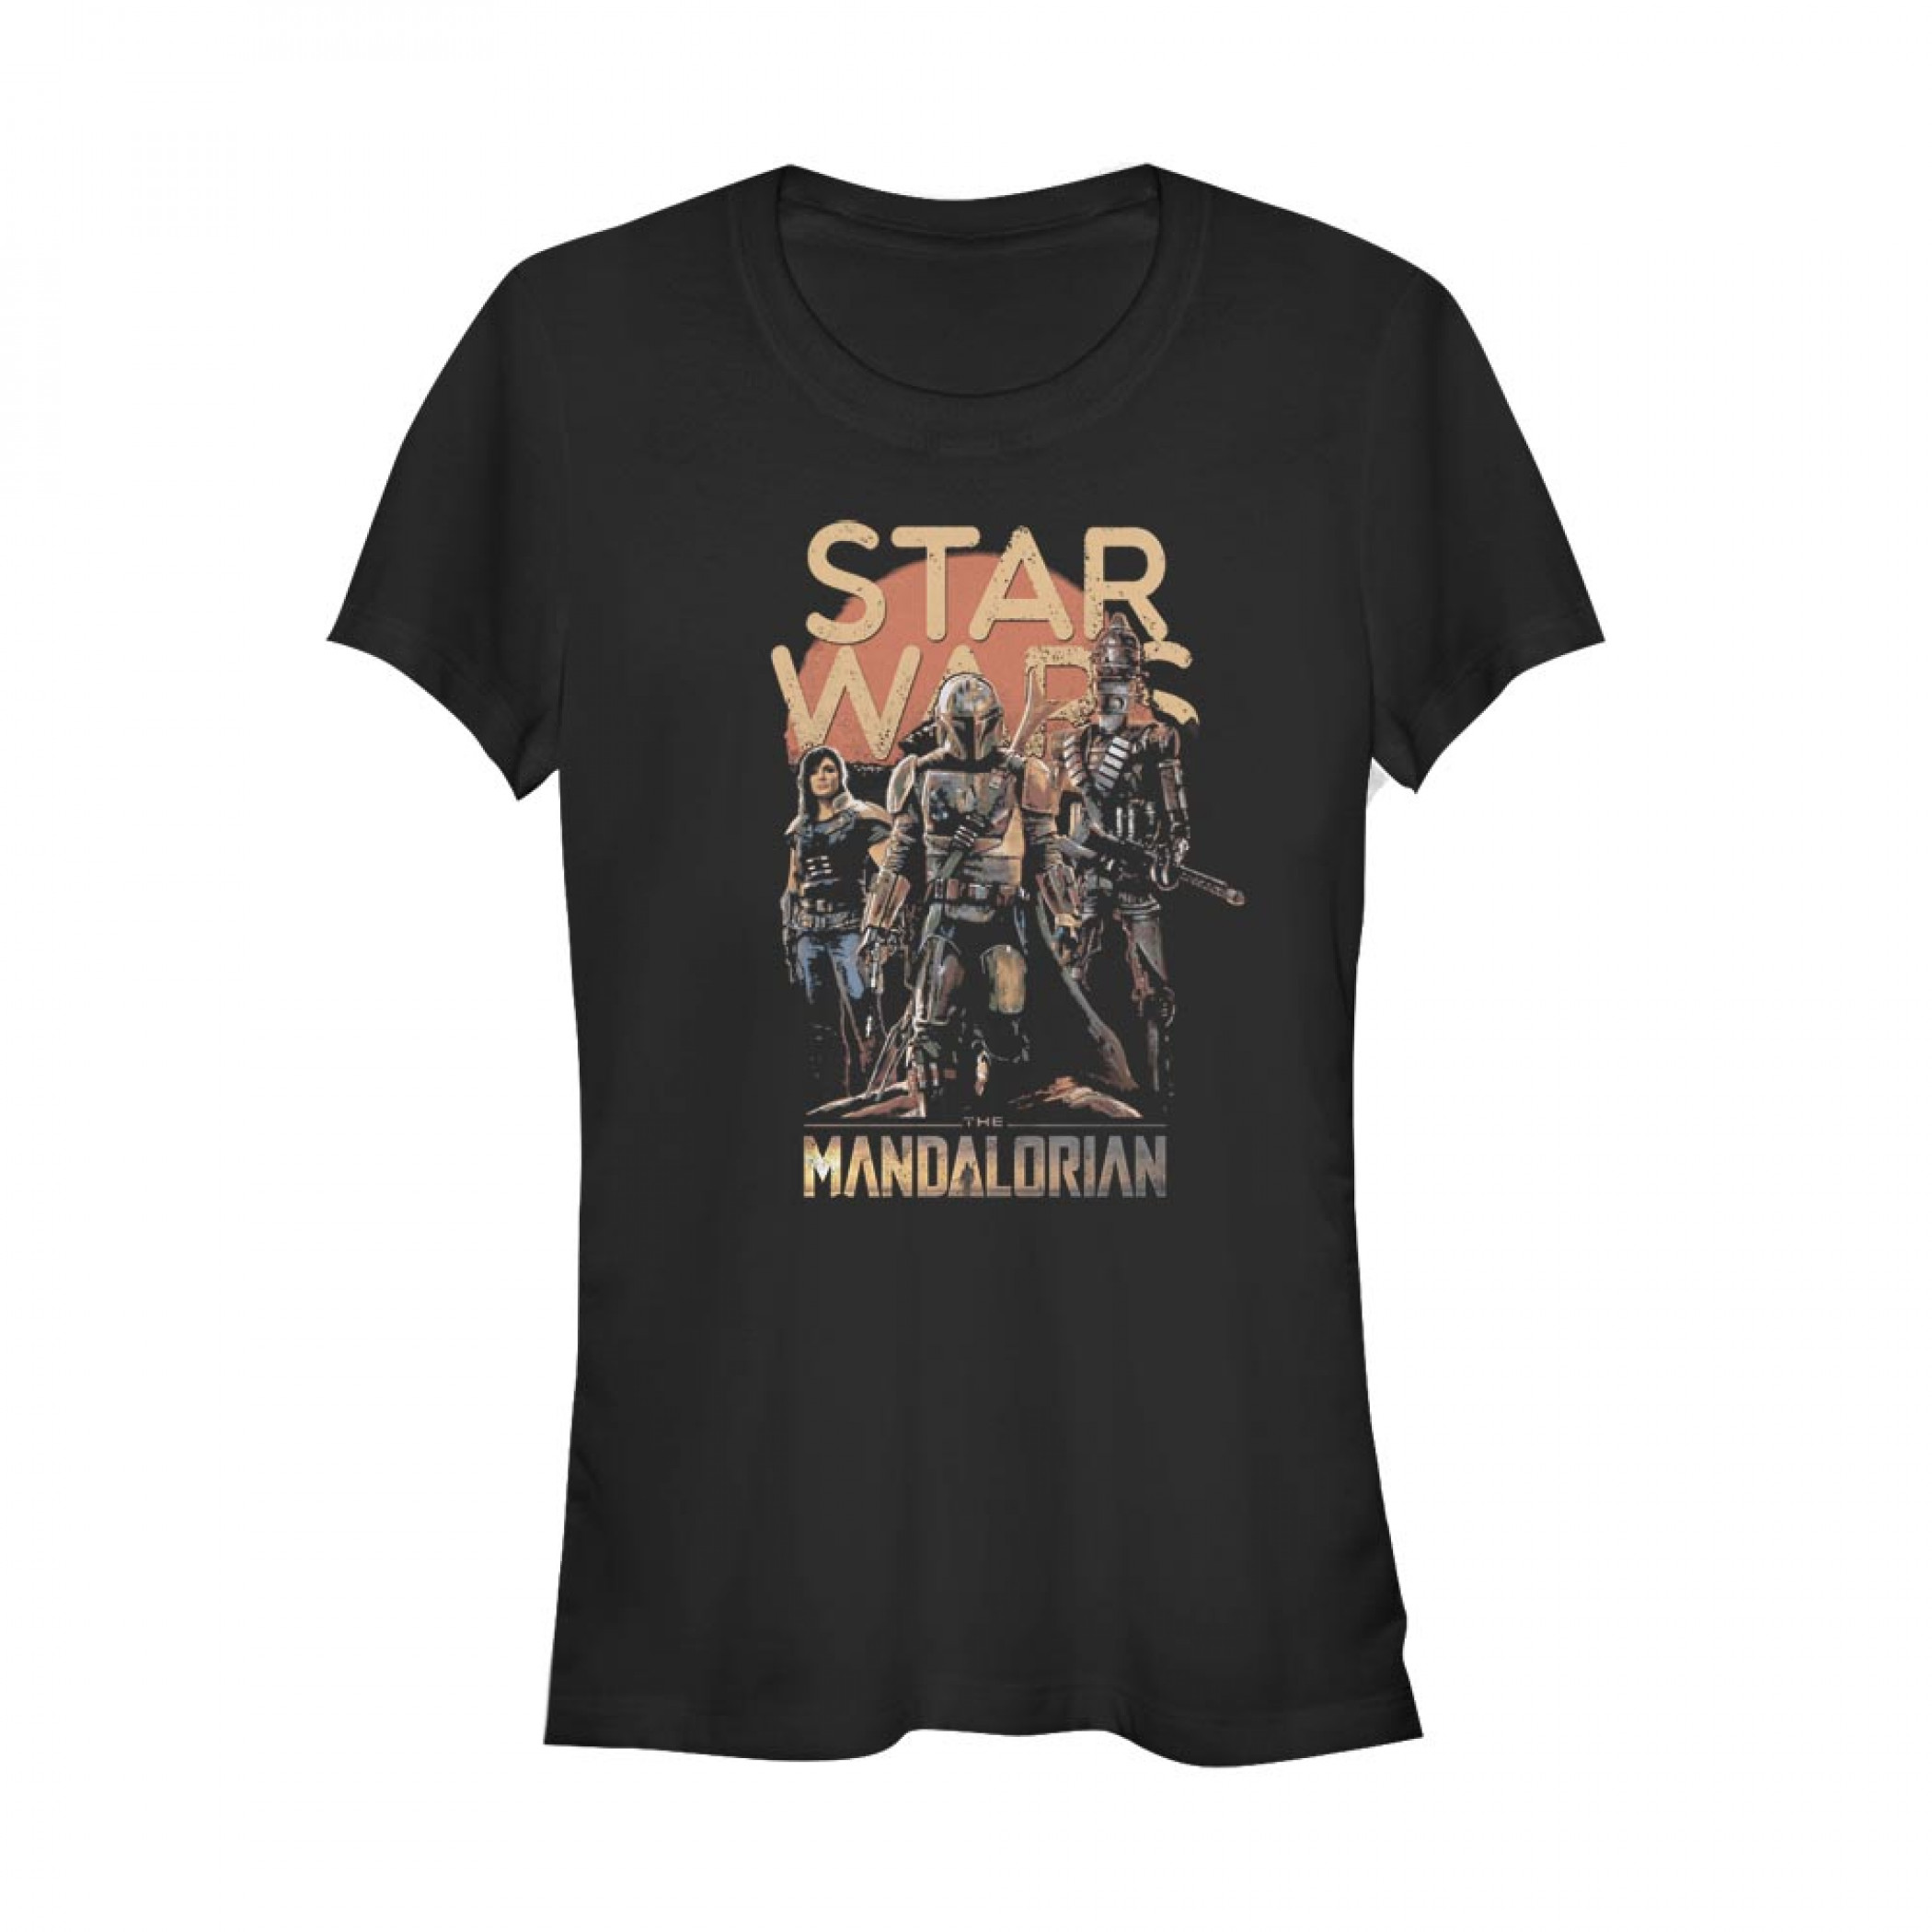 The Mandalorian Grunge Characters Women's T-Shirt